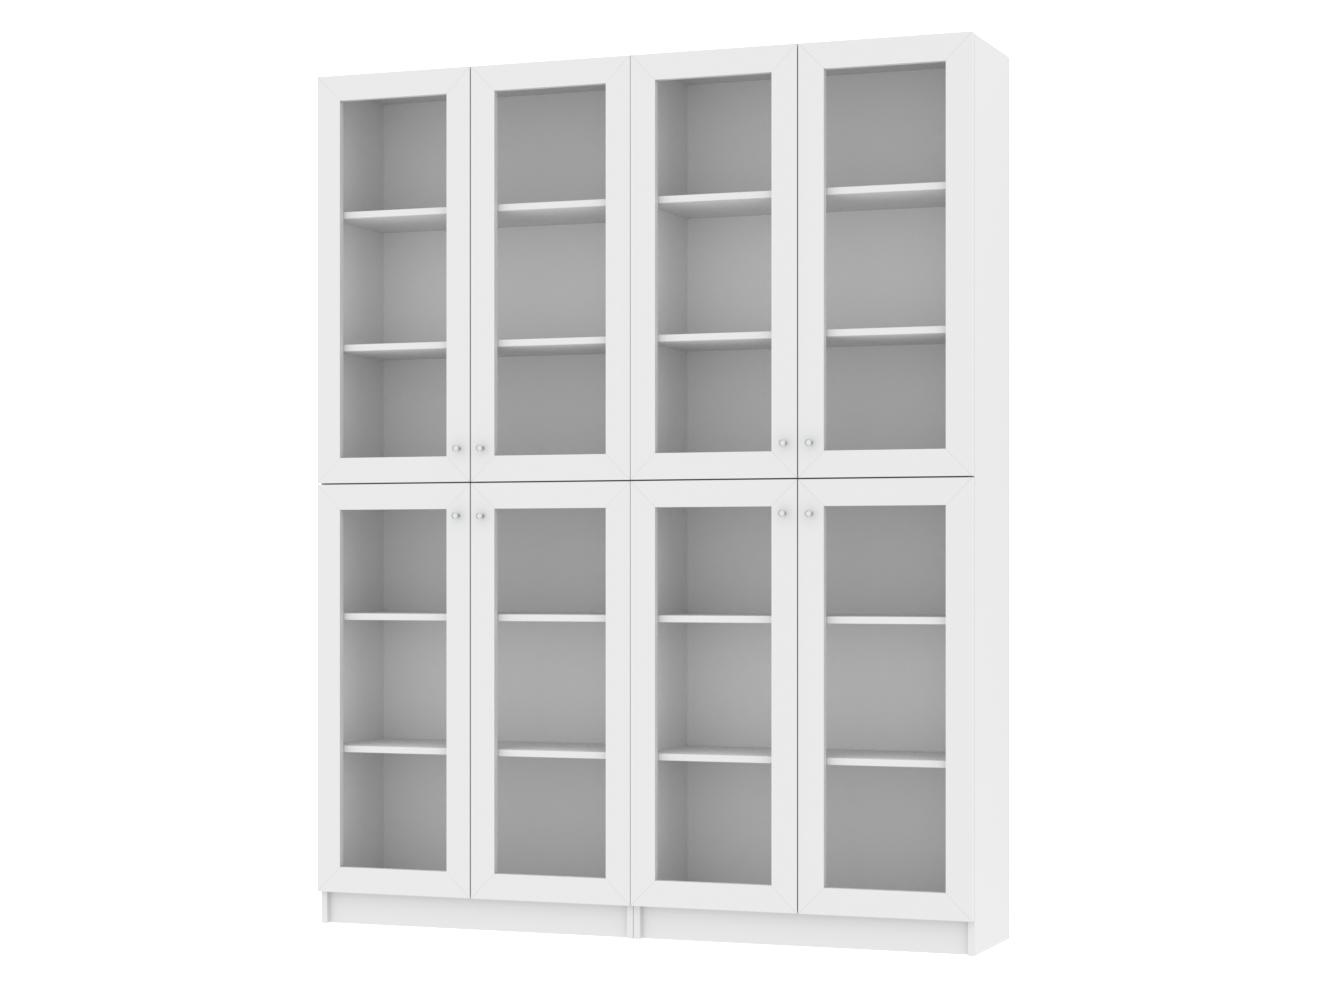  Книжный шкаф Билли 343 white ИКЕА (IKEA) изображение товара